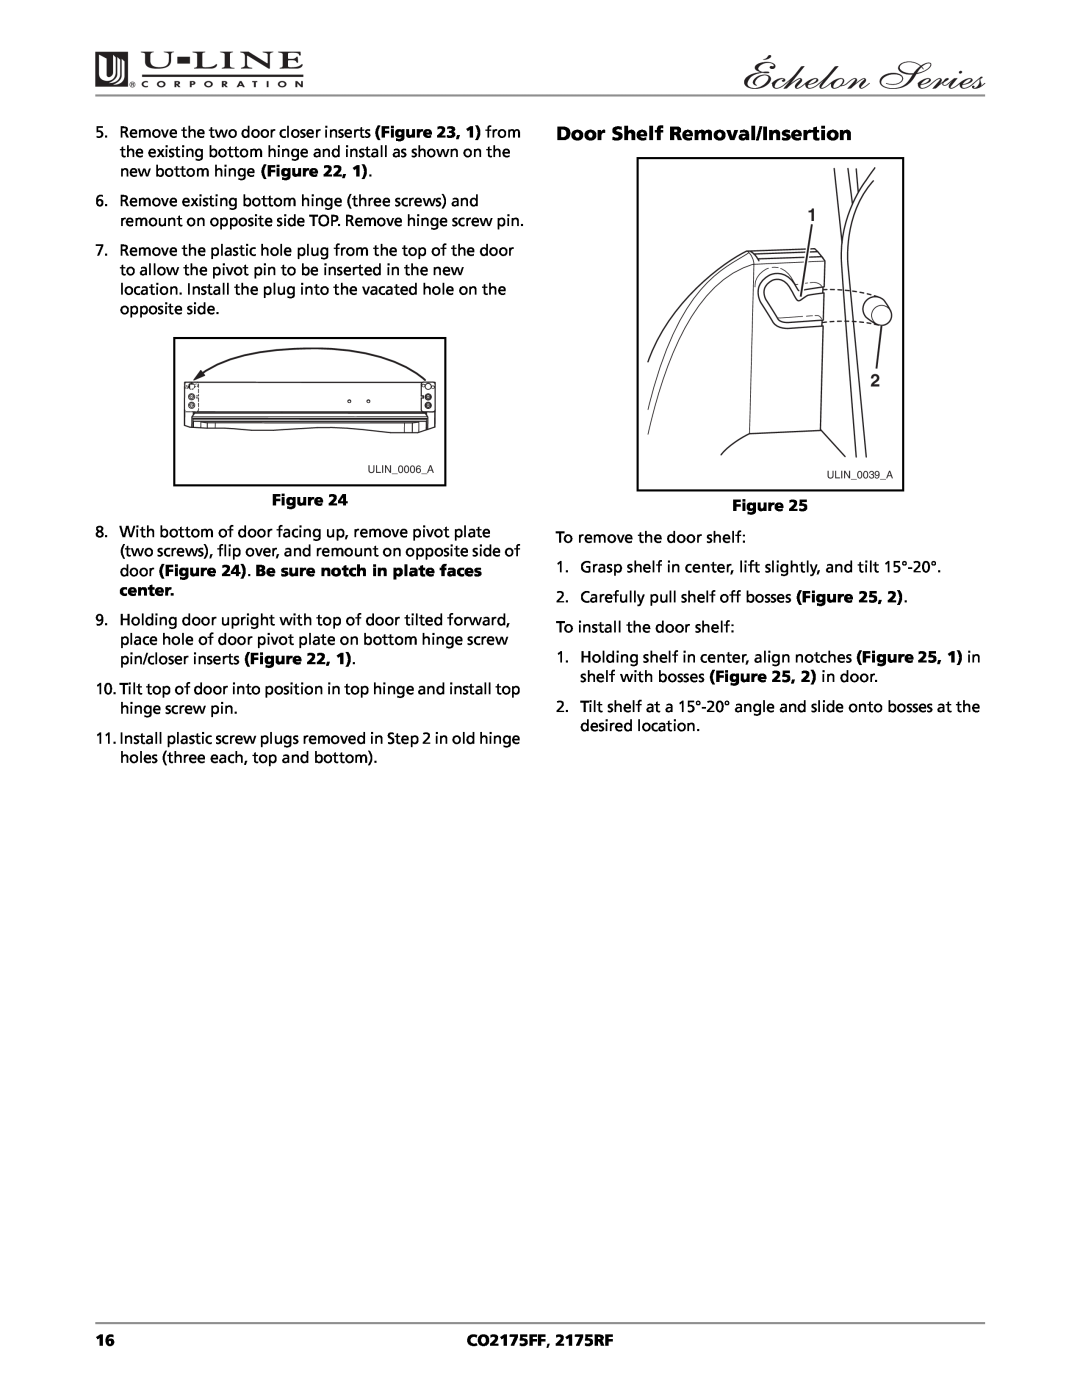 U-Line CO2175RF manual Door Shelf Removal/Insertion, CO2175FF, 2175RF 